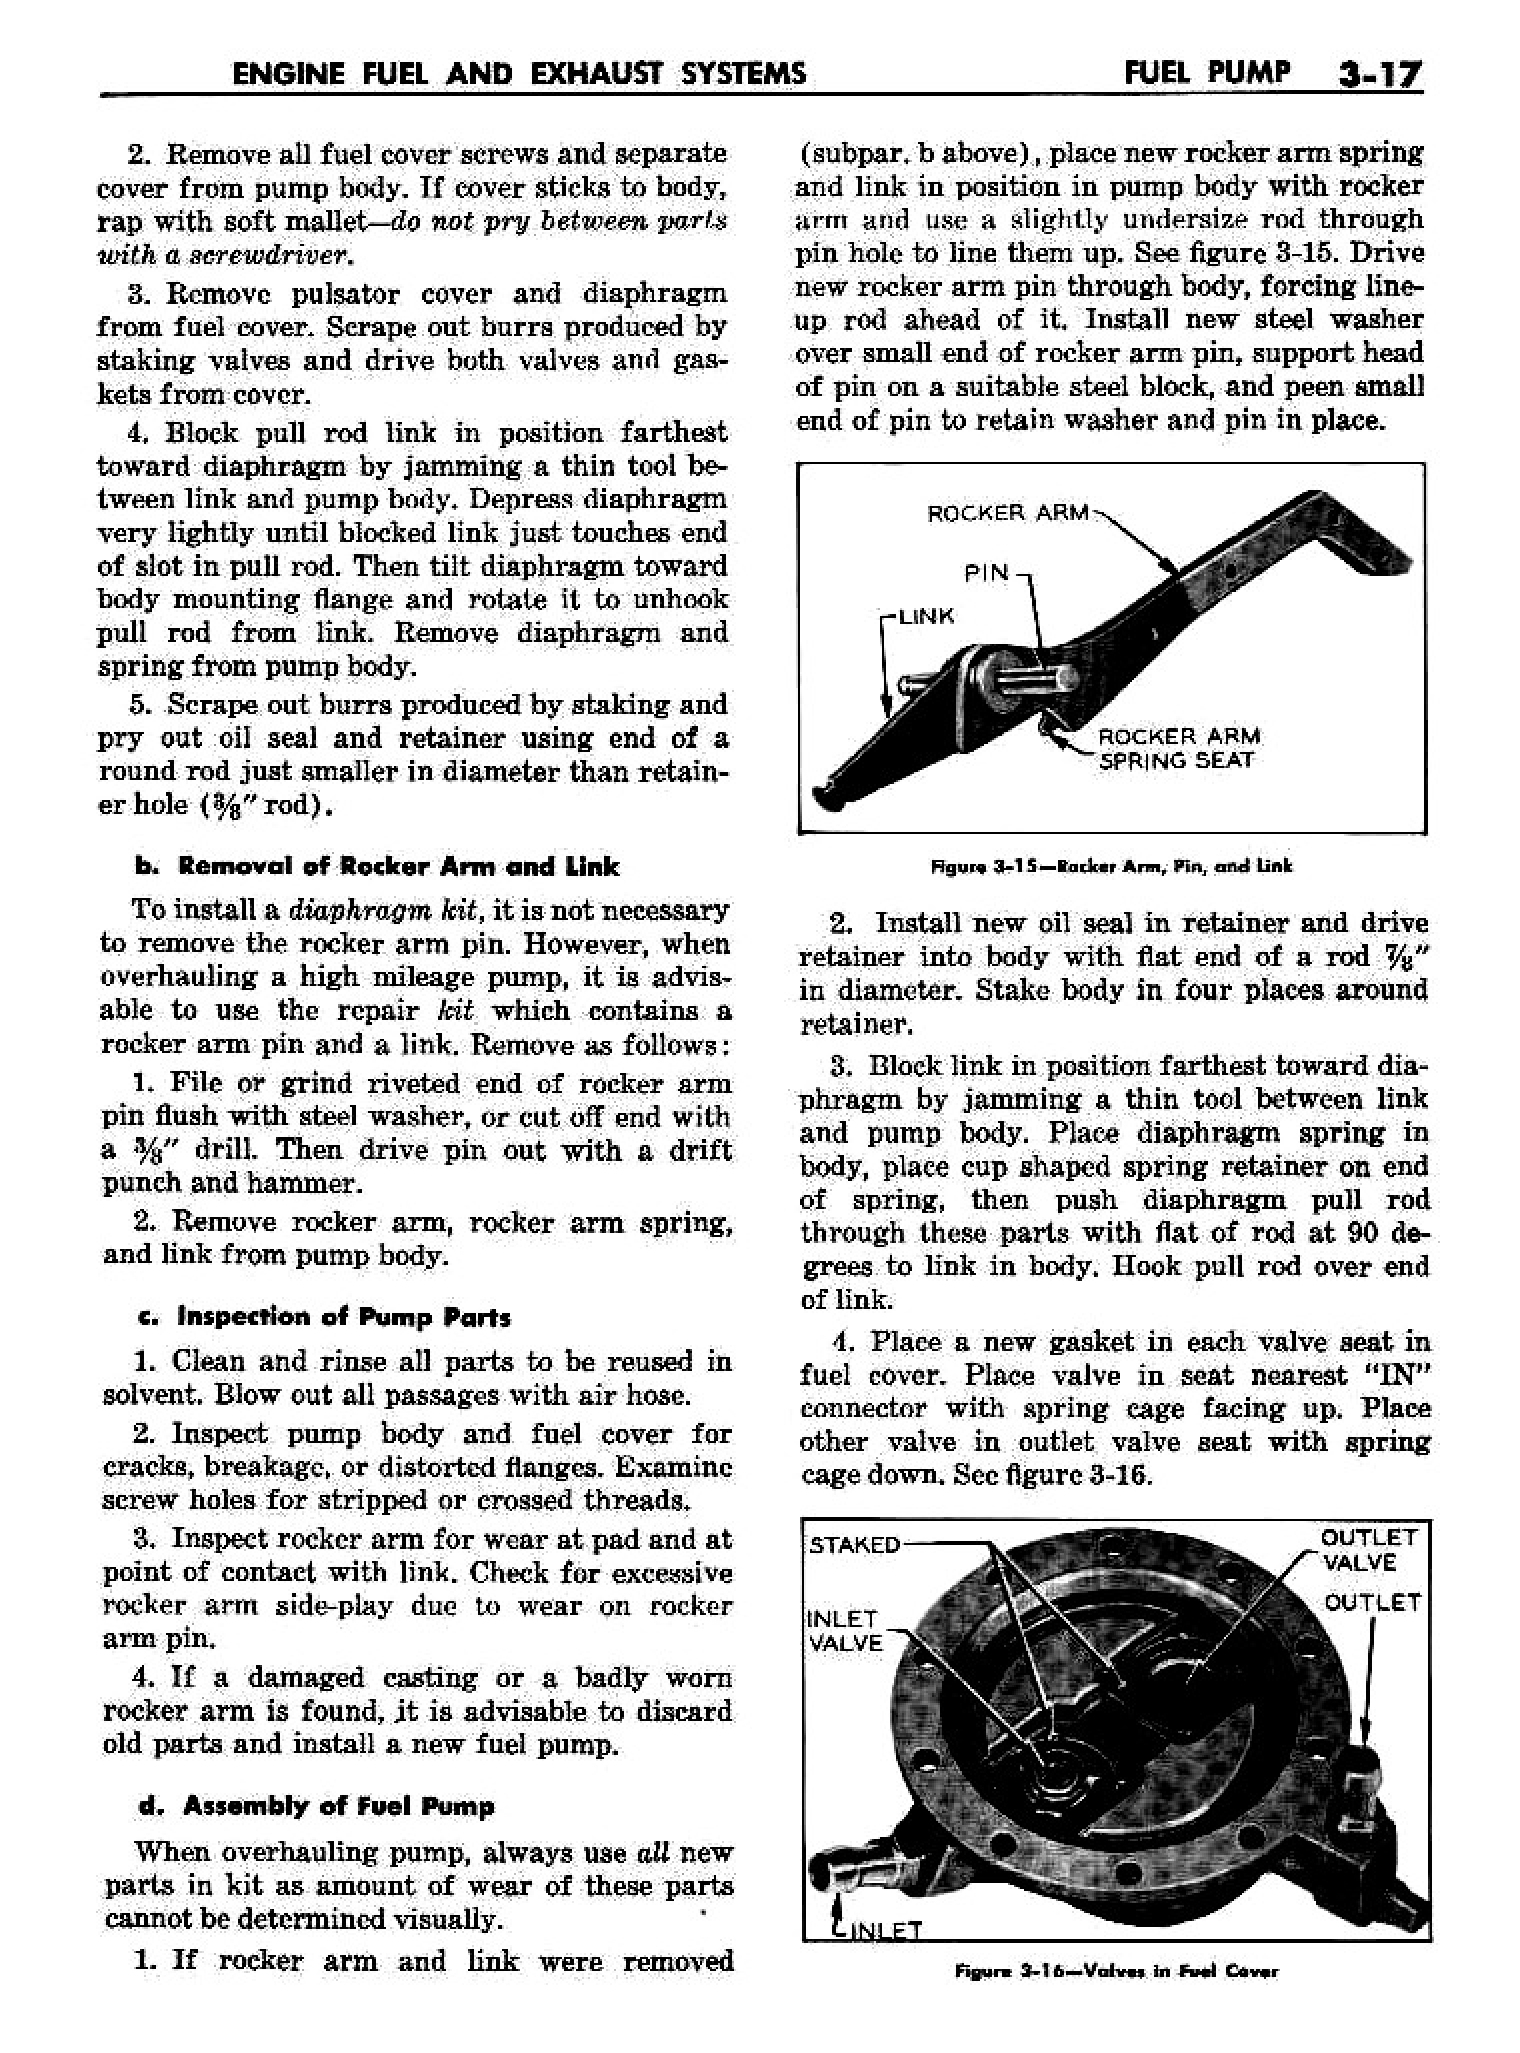 n_04 1958 Buick Shop Manual - Engine Fuel & Exhaust_17.jpg